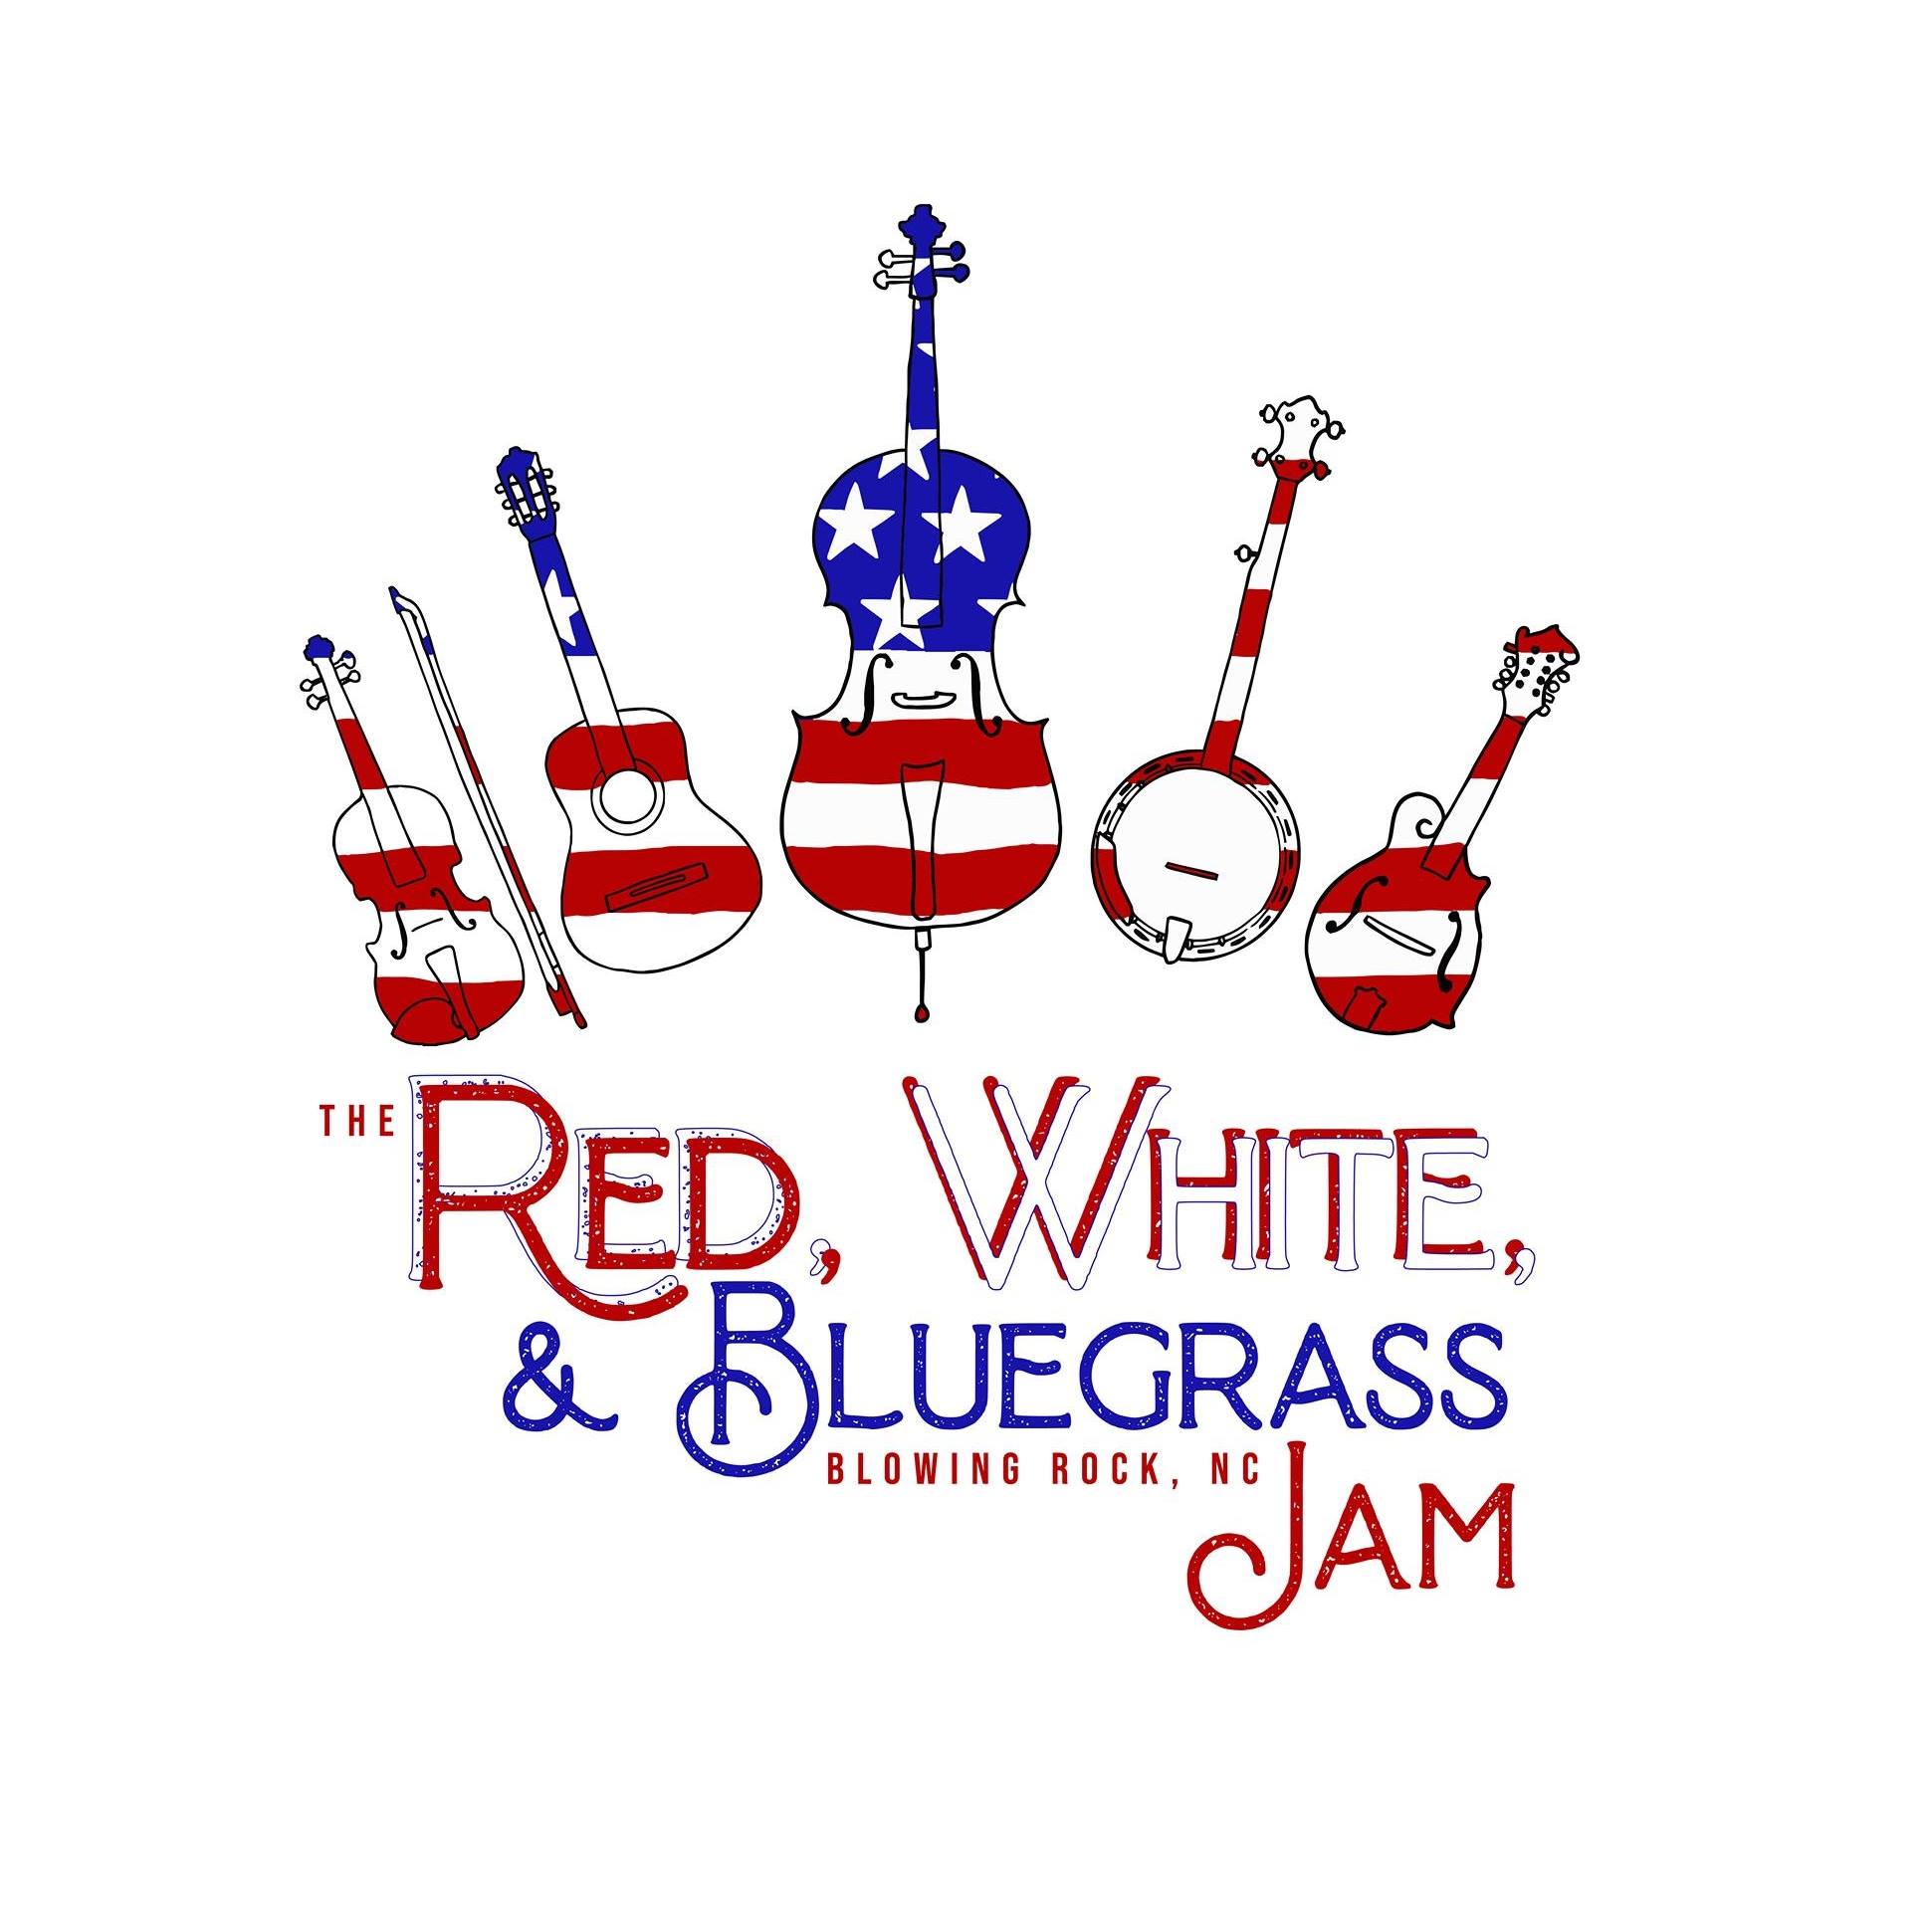 Red White Bluegrass Jam Blowing Rock.jpg